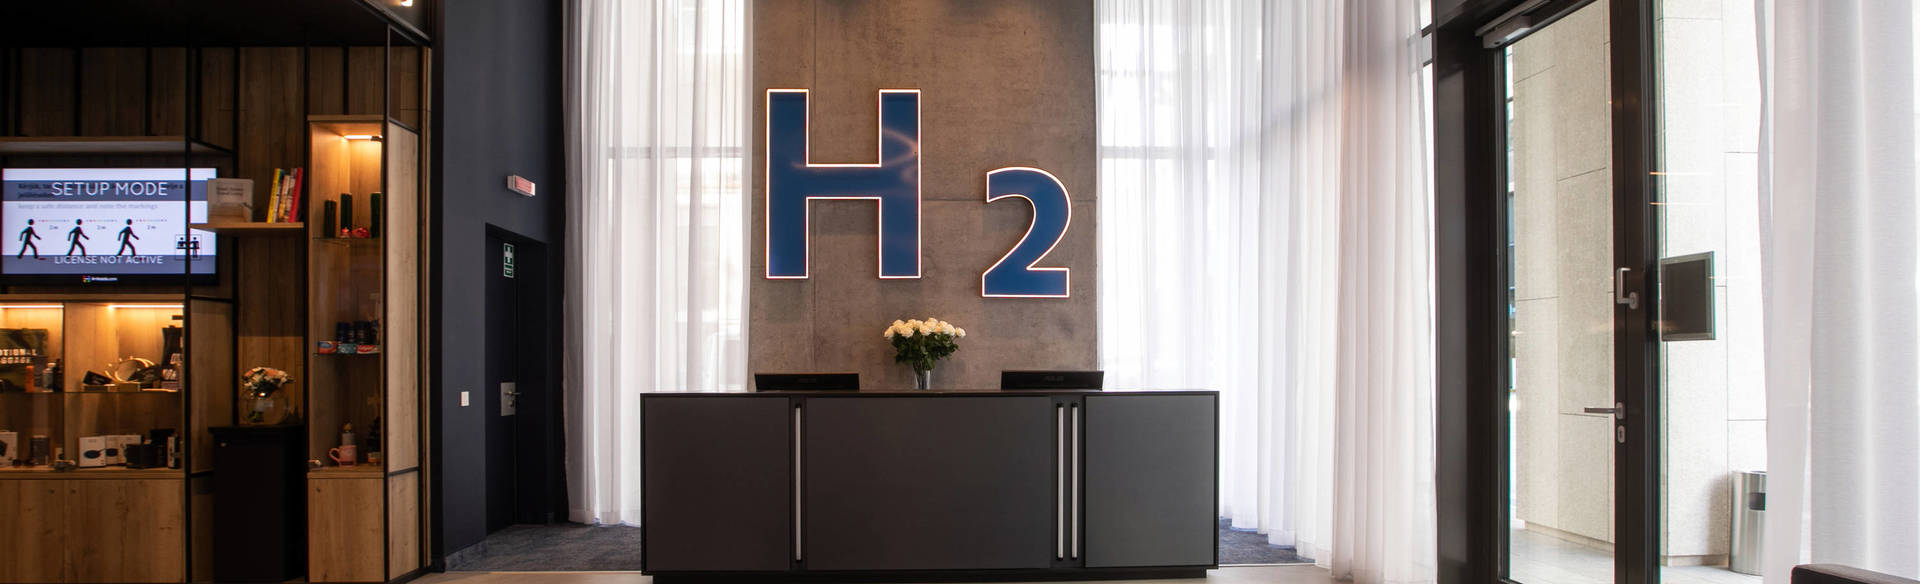 Évaluation: H2 Hotel Budapest